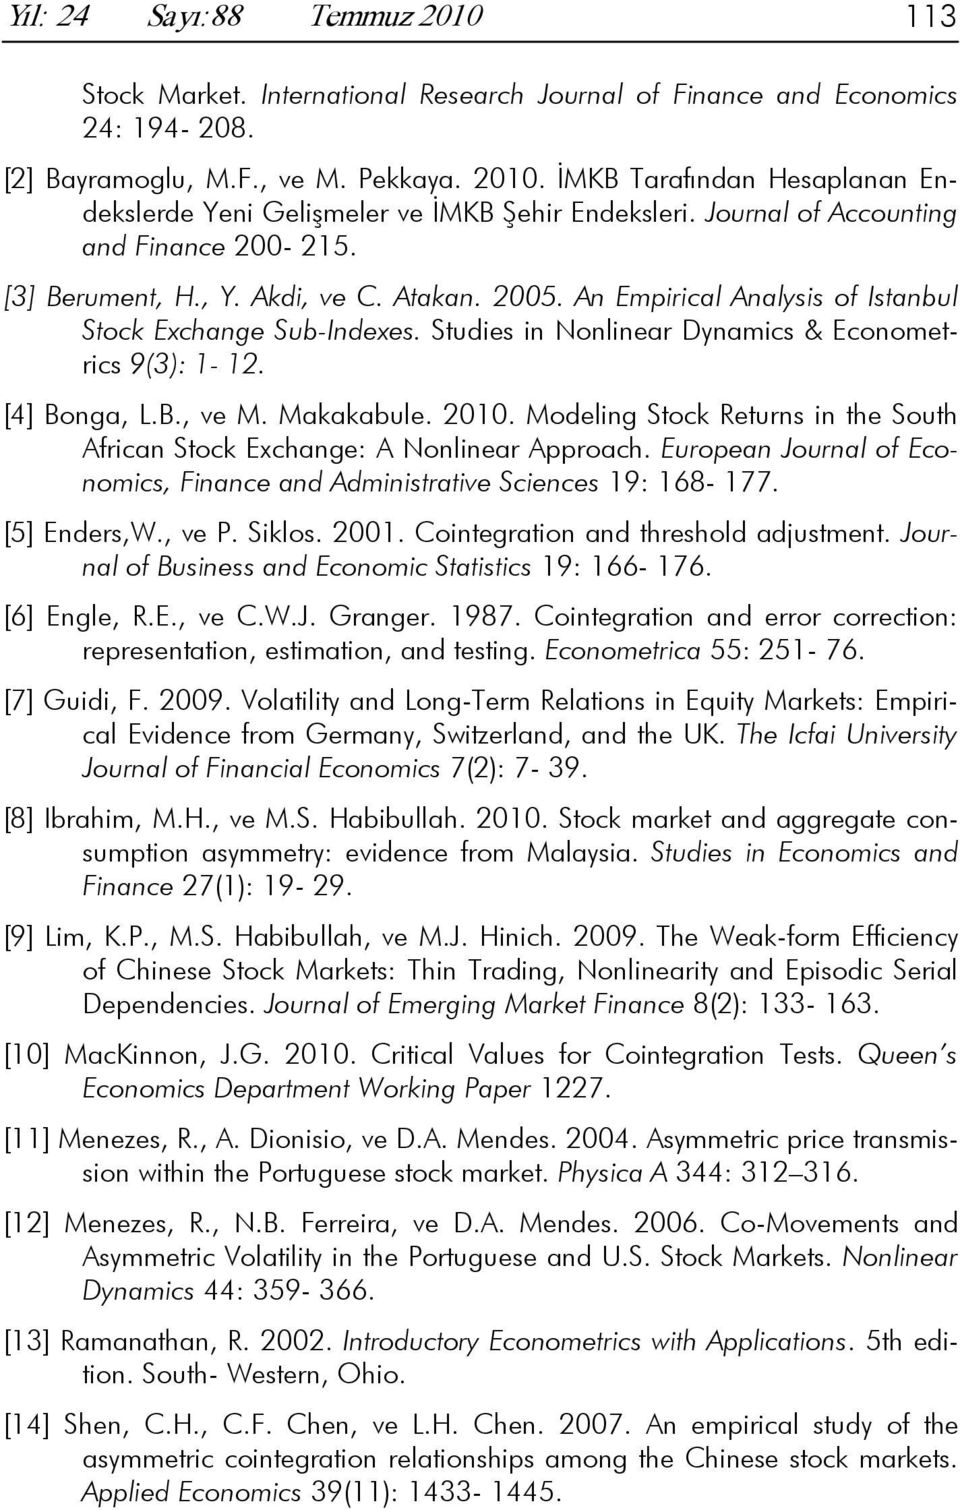 Sudies in Nonlinear Dynamics & Economerics 9(3): 1-12. [4] Bonga, L.B., ve M. Makakabule. 2010. Modeling Sock Reurns in he Souh African Sock Exchange: A Nonlinear Approach.